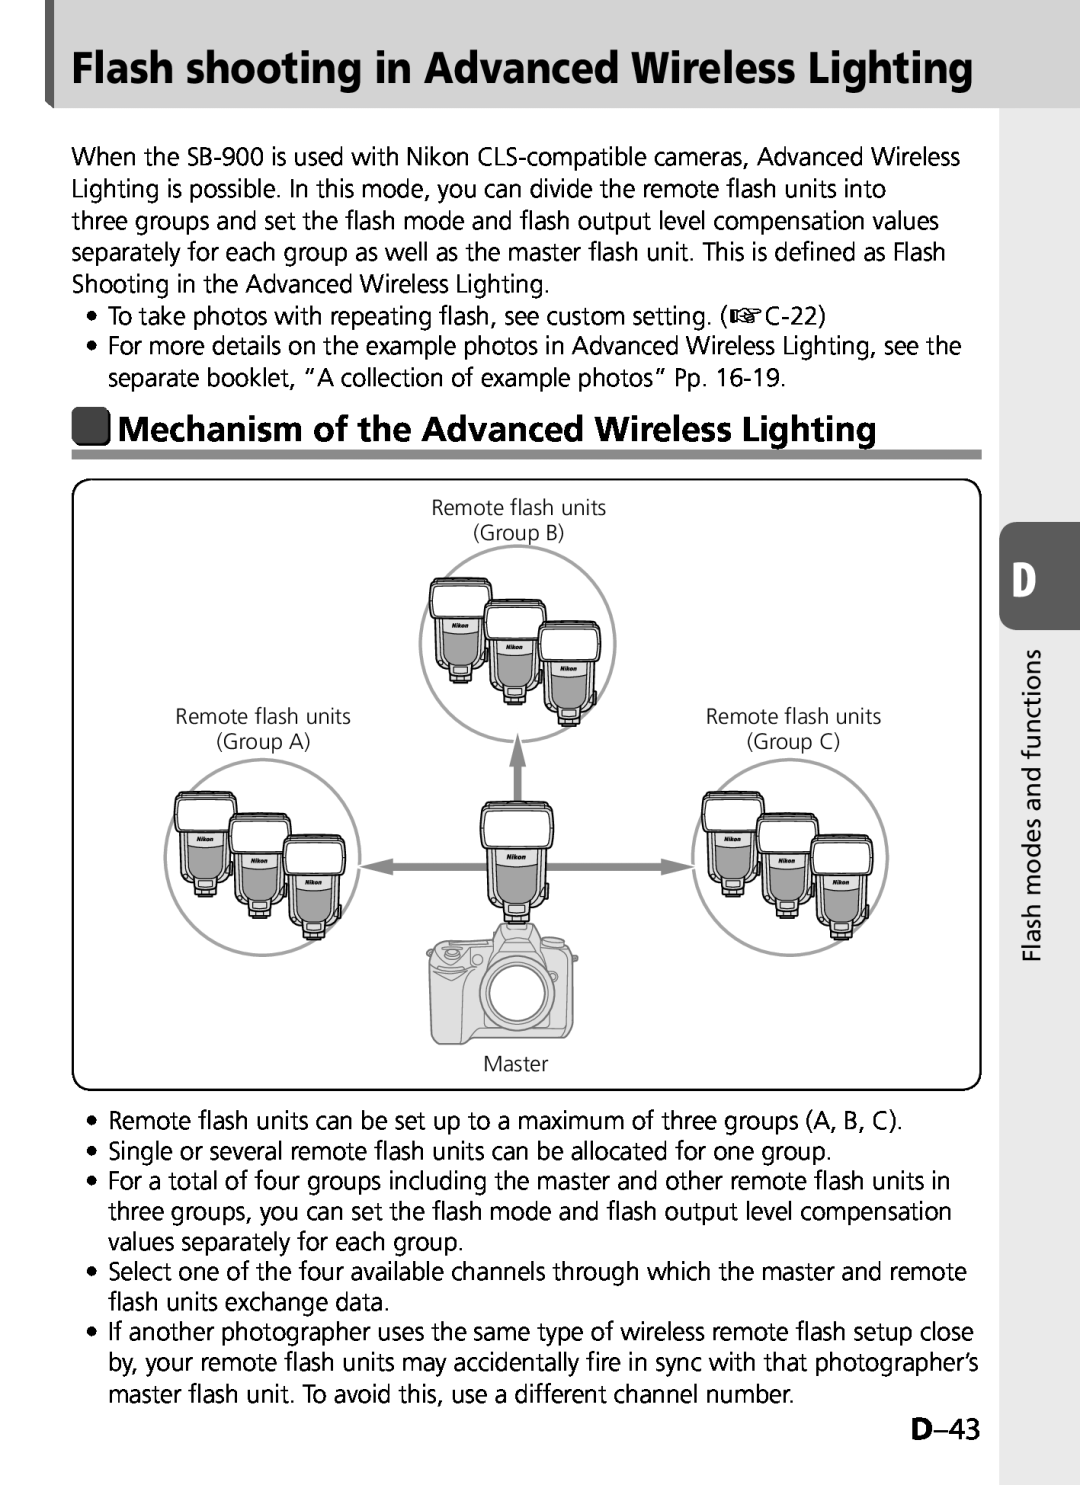 Univex SB-900 user manual Flash shooting in Advanced Wireless Lighting, Mechanism of the Advanced Wireless Lighting, D–43 